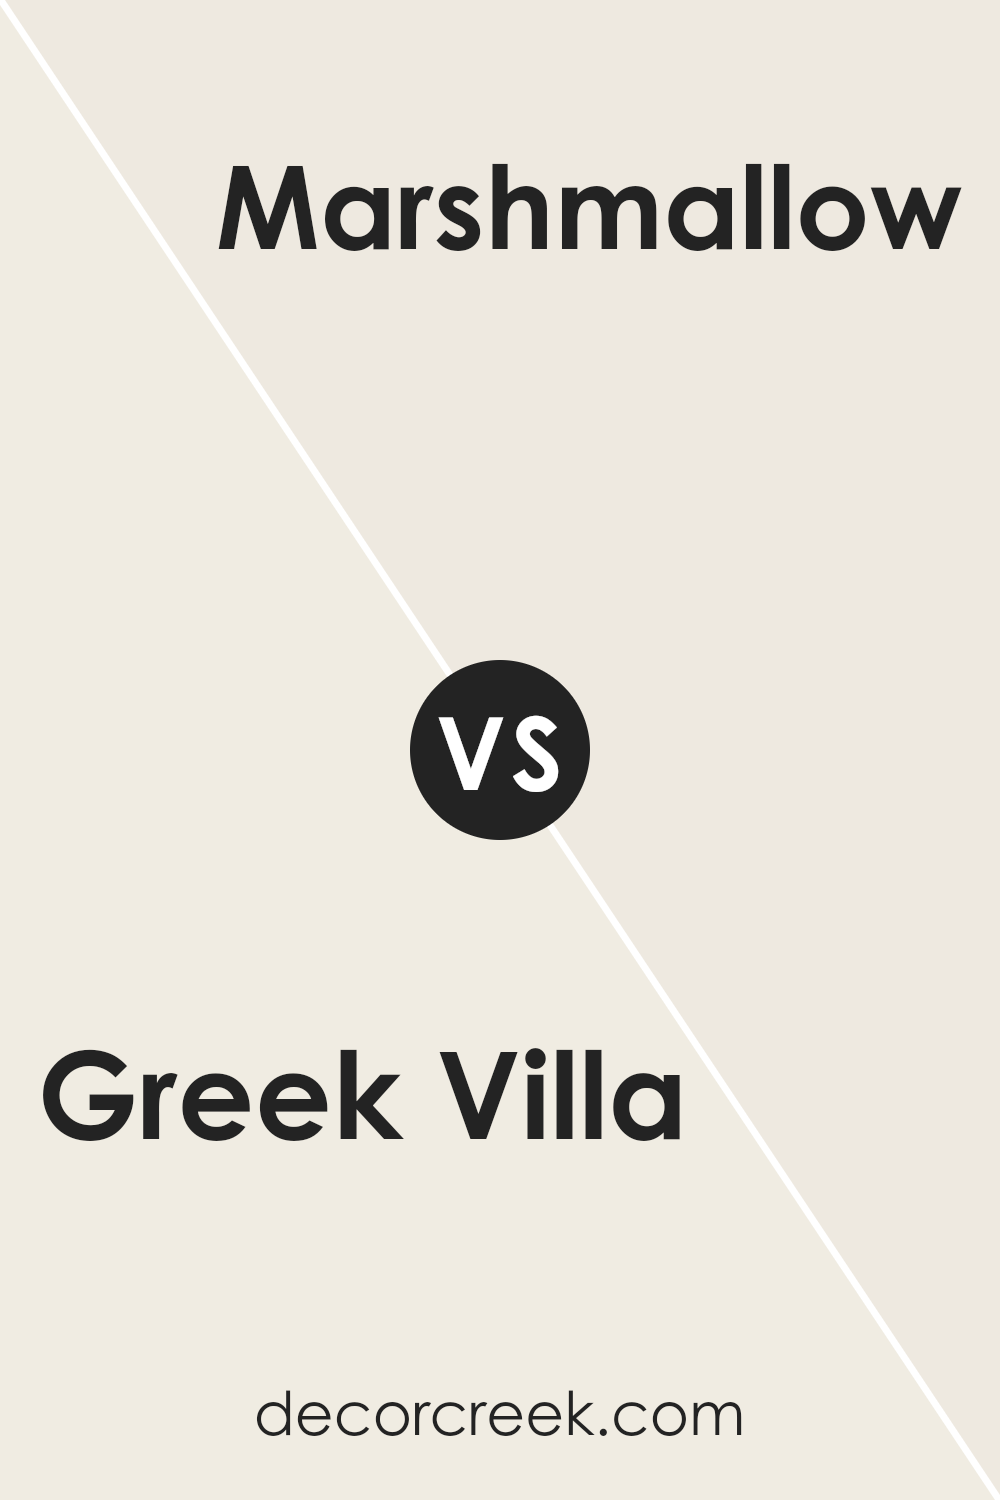 greek_villa_sw_7551_vs_marshmallow_sw_7001